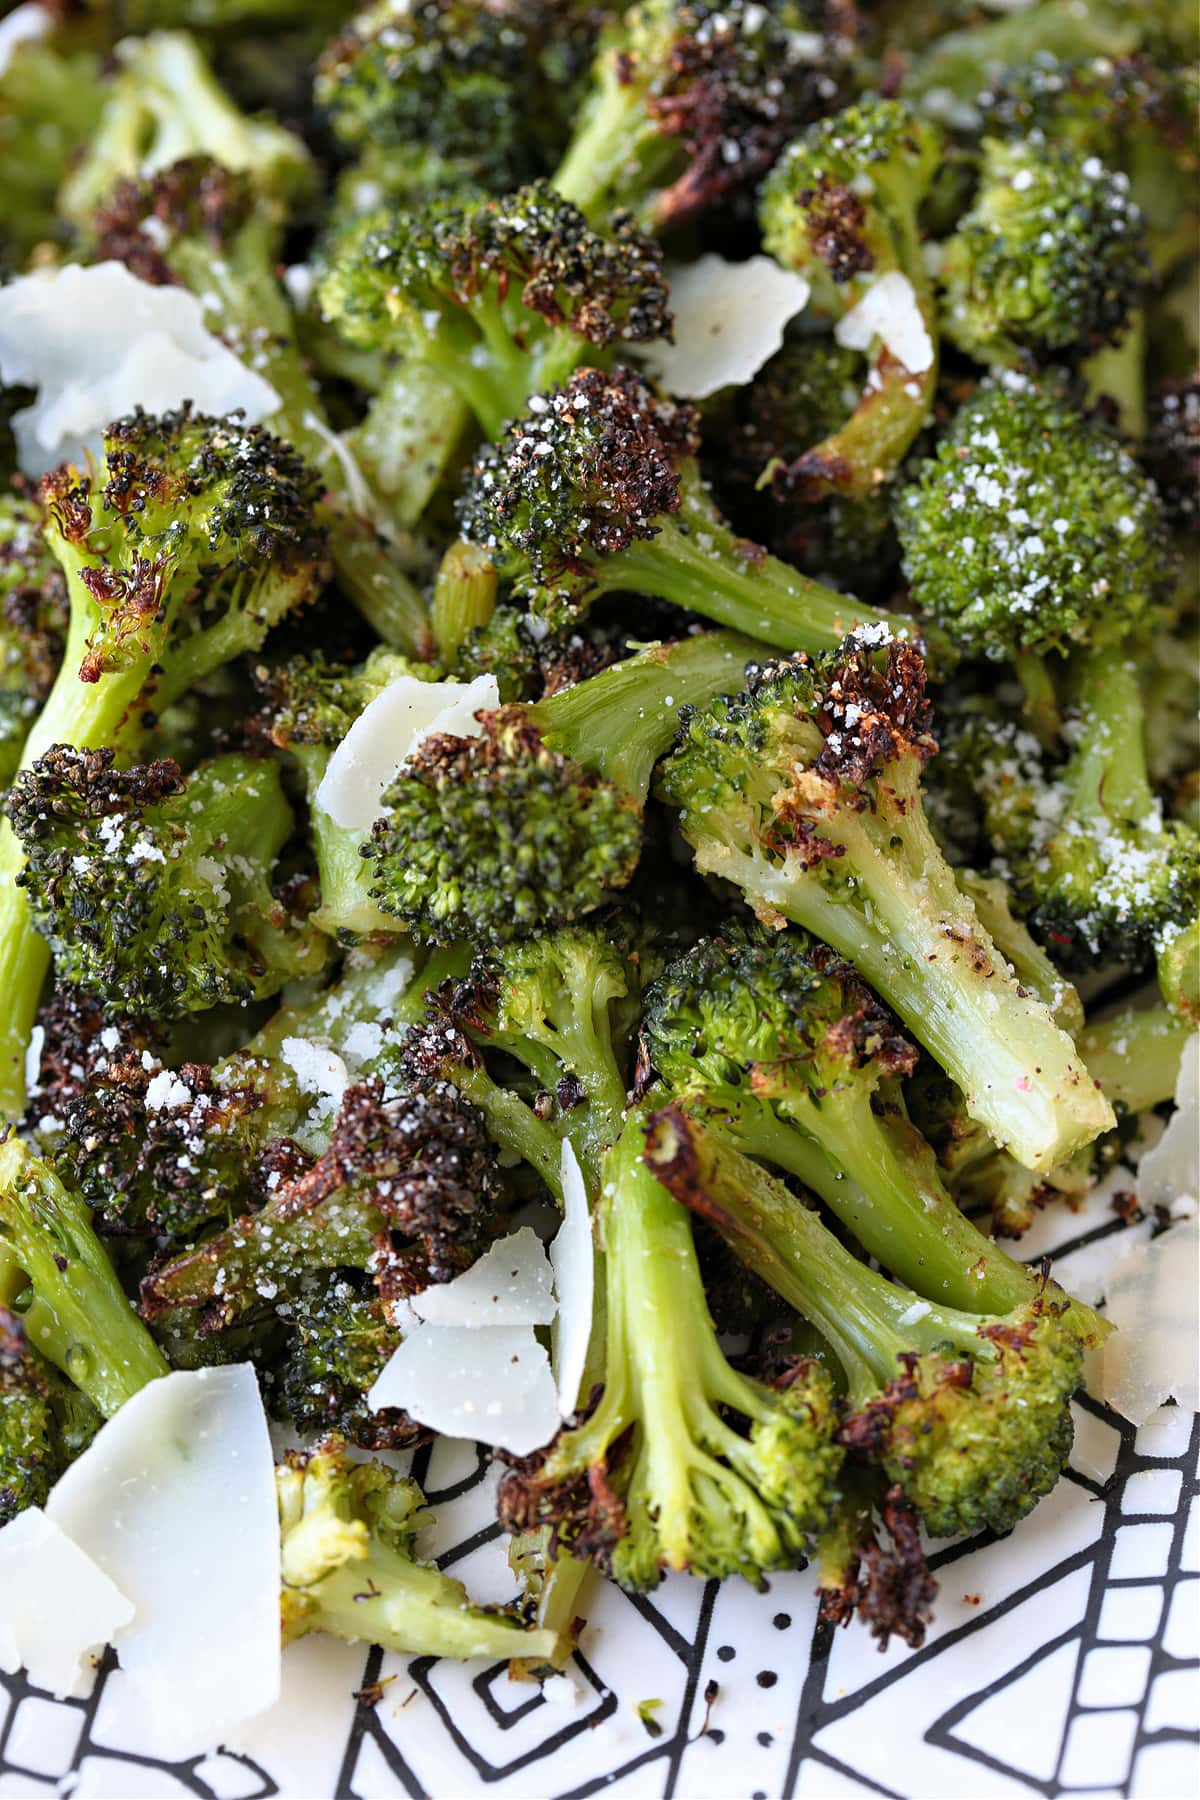 crispy broccoli florets with parmesan cheese